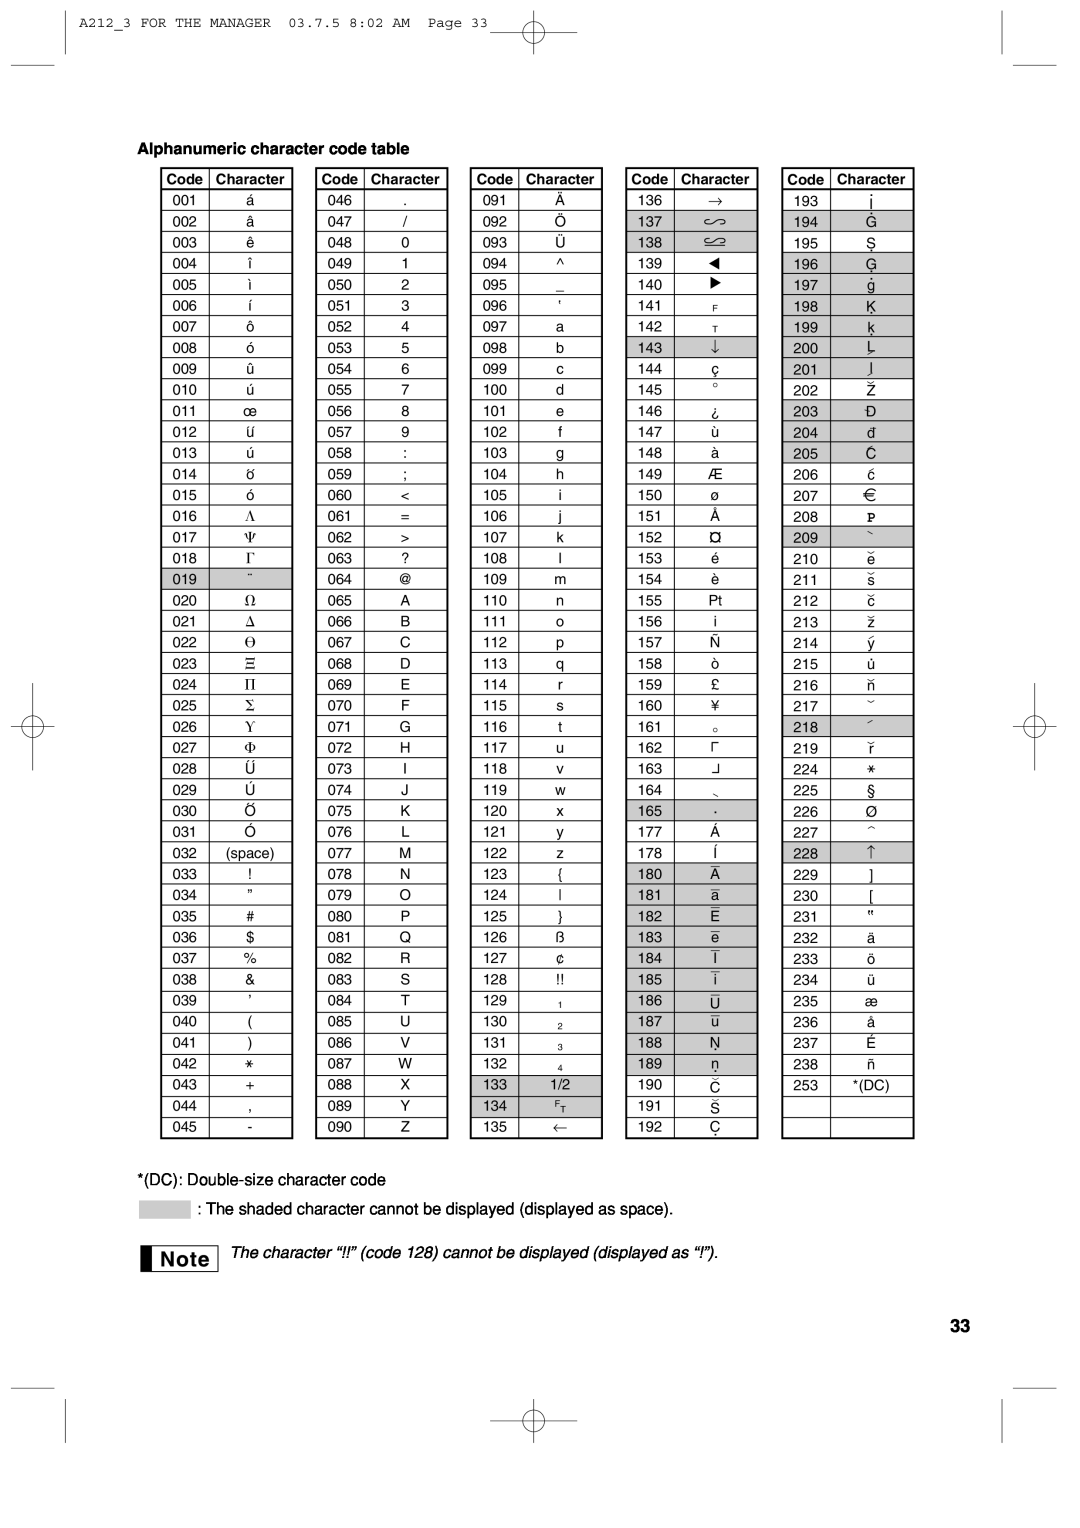 Sharp XE-A212 231 ”, Alphanumeric character code table, The character “!!” code 128 cannot be displayed displayed as “!” 